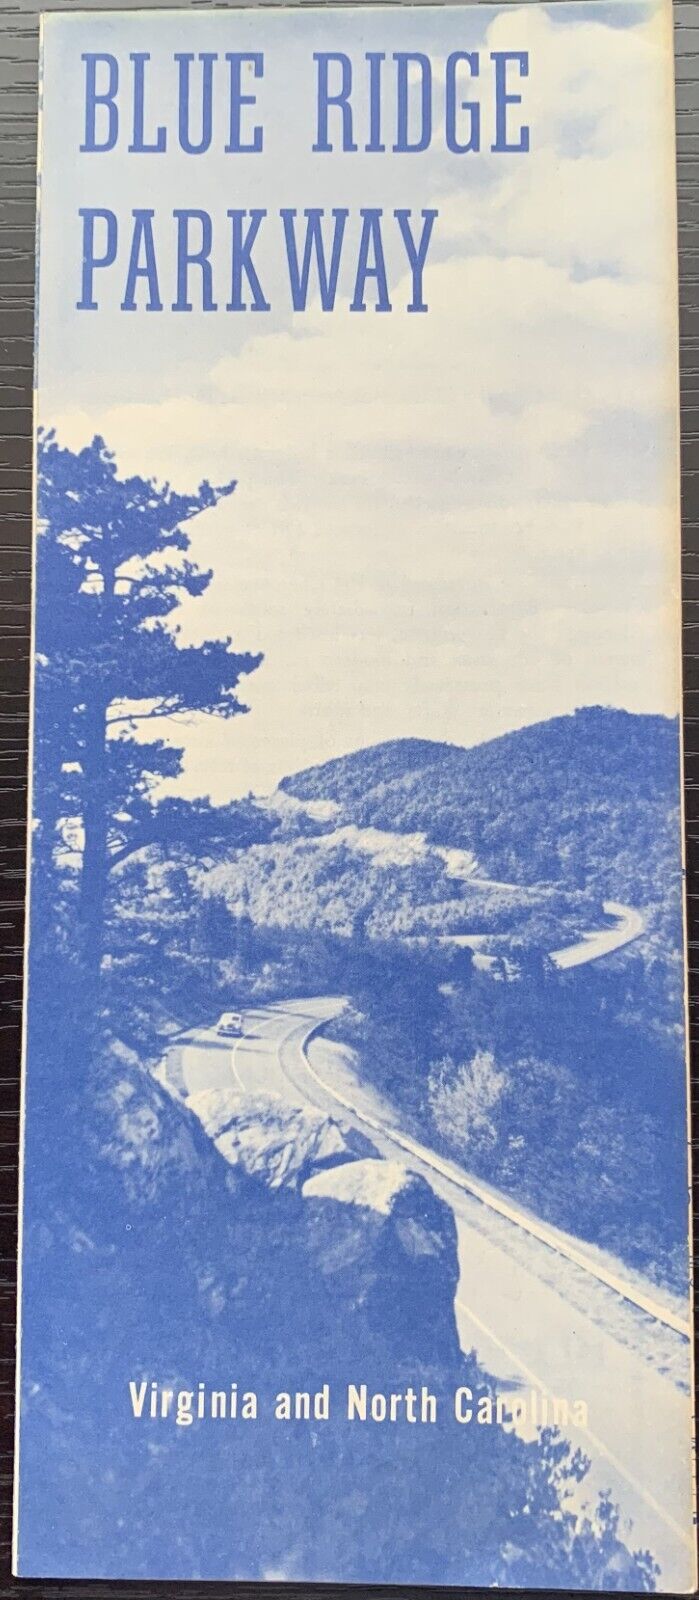 1959 BLUE RIDGE PARKWAY VIRGINIA AND NORTH CAROLINA TRAVEL GUIDED MAP #3